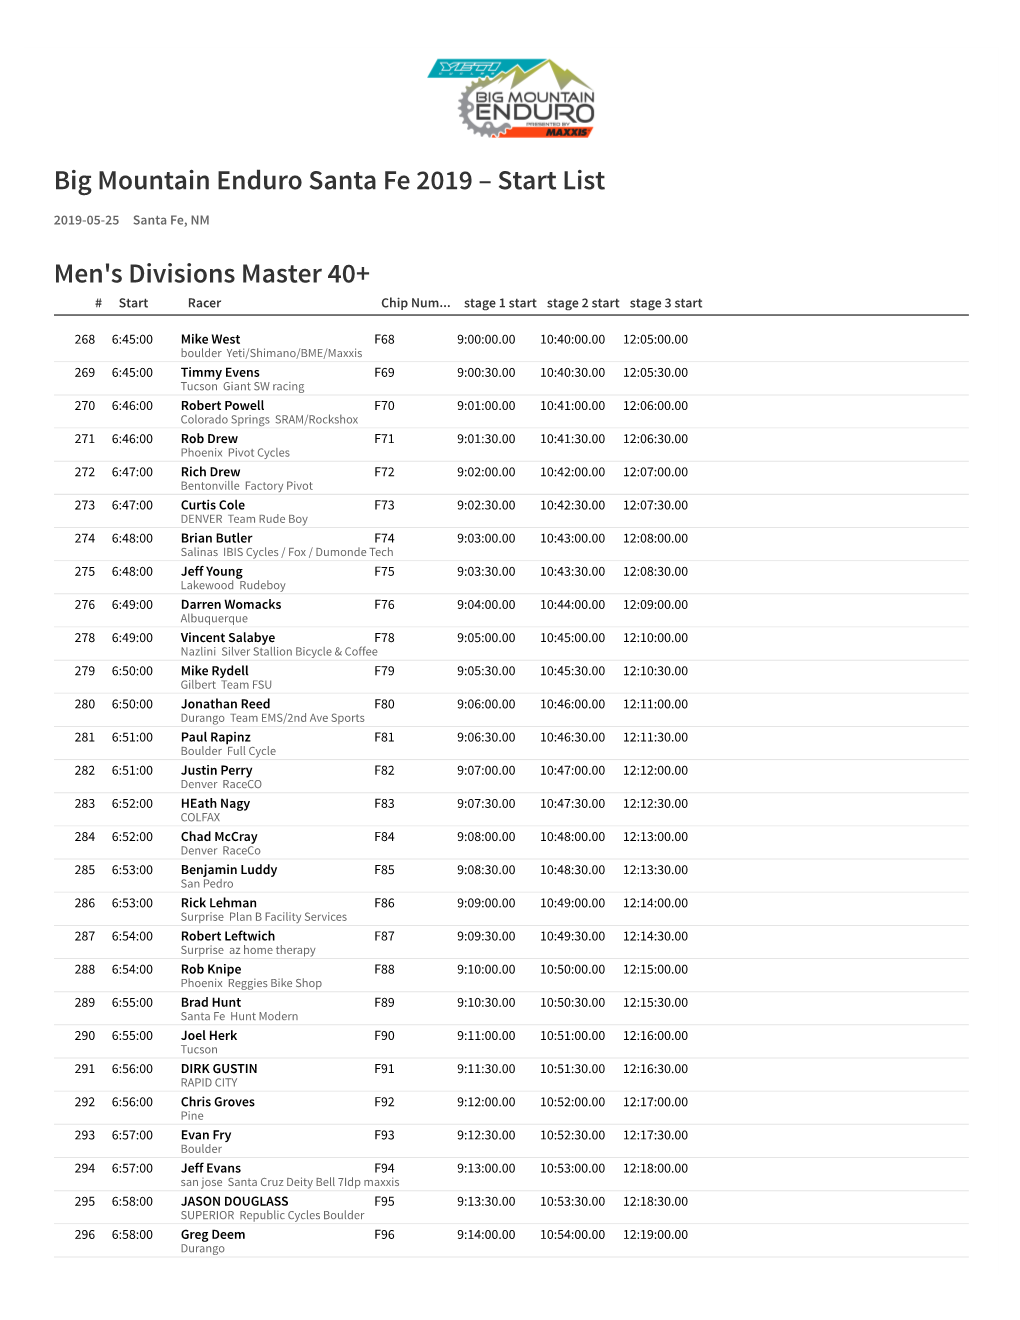 Big Mountain Enduro Santa Fe 2019 – Start List Men's Divisions Master